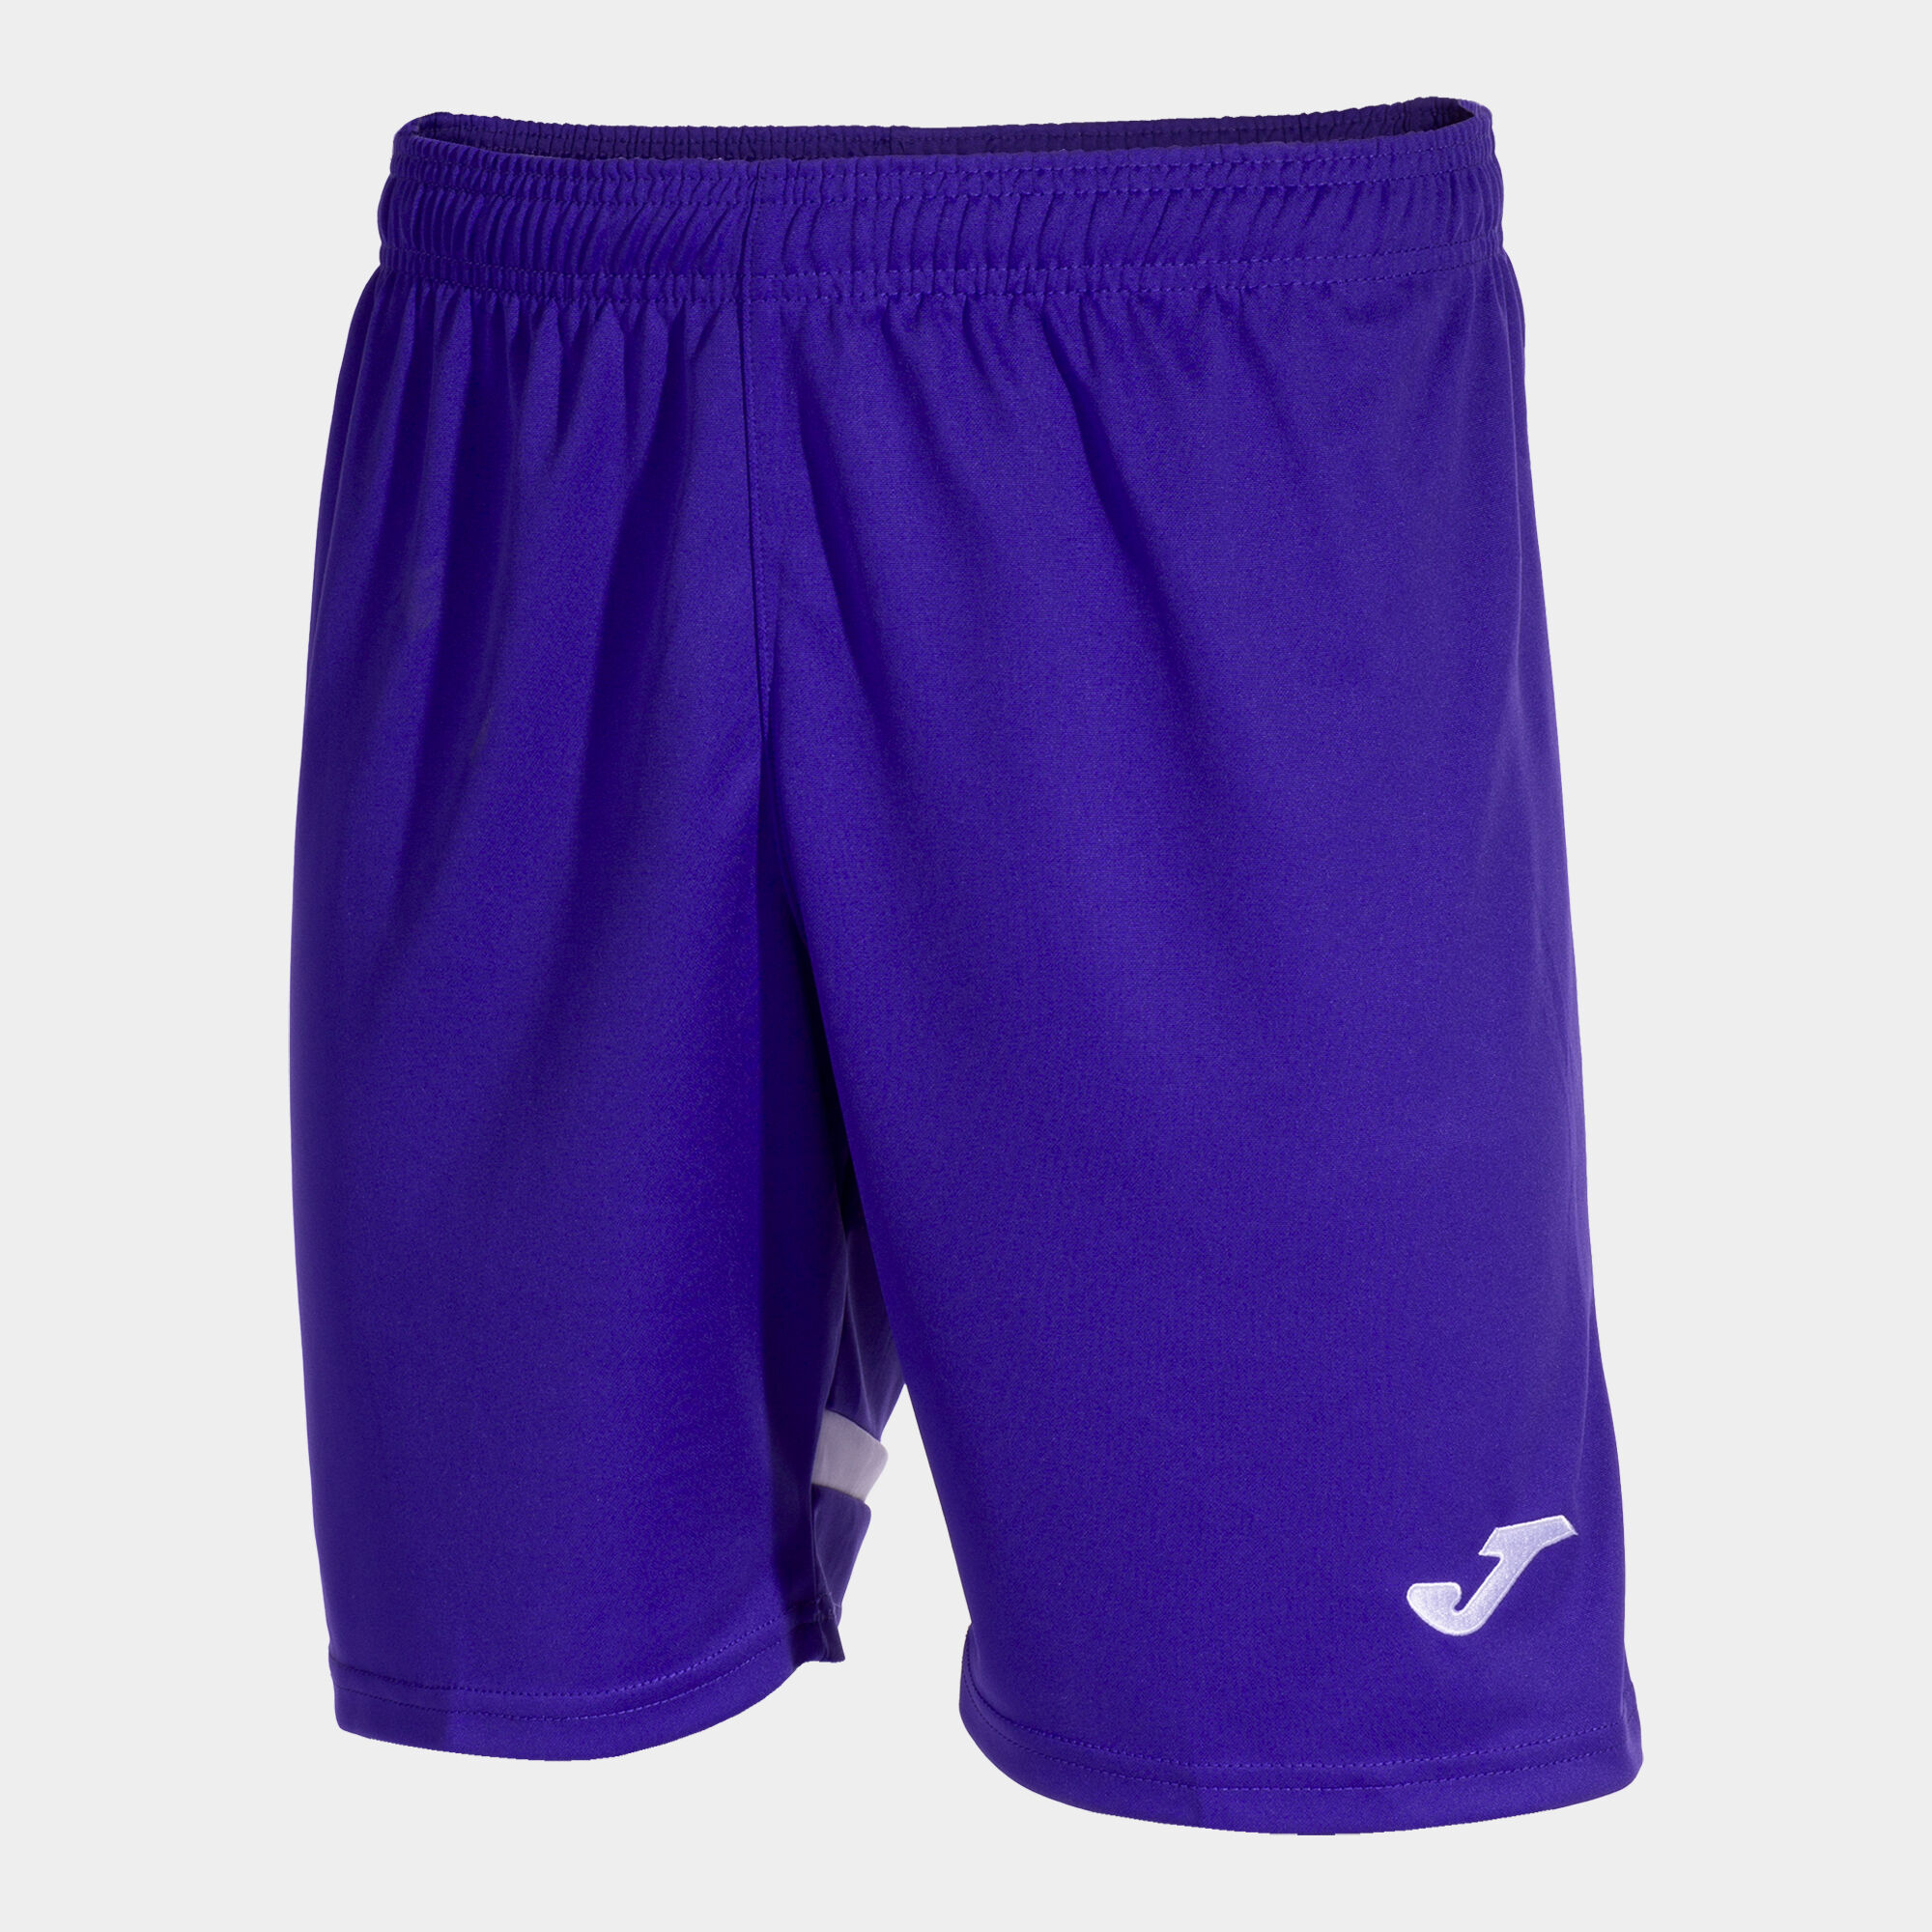 Shorts man Tokyo violet white